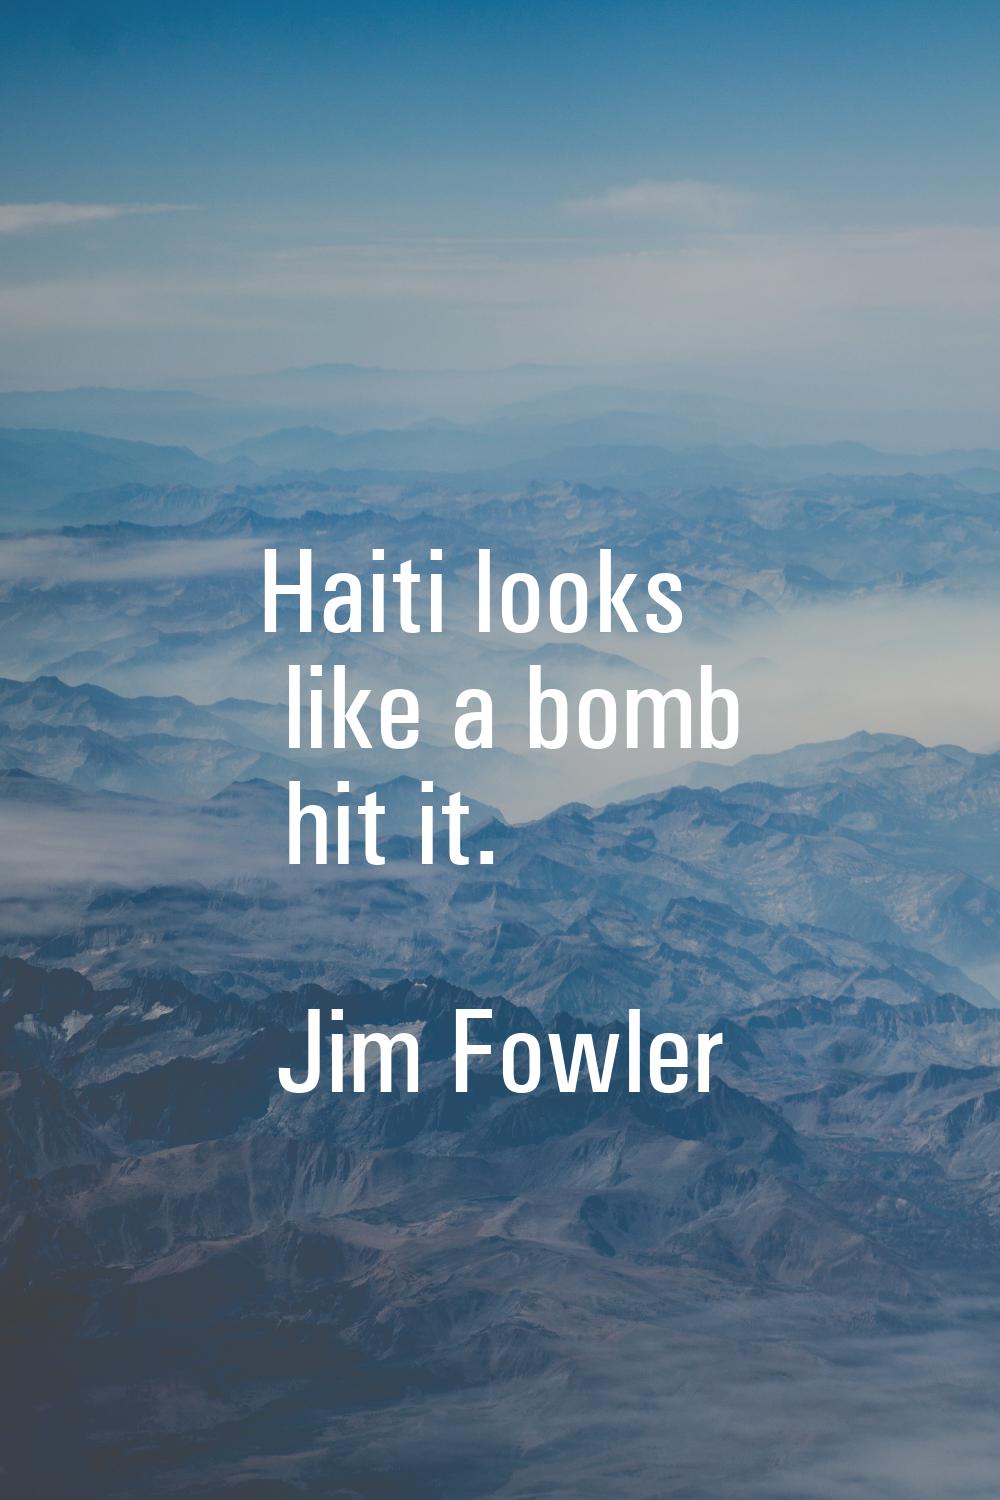 Haiti looks like a bomb hit it.